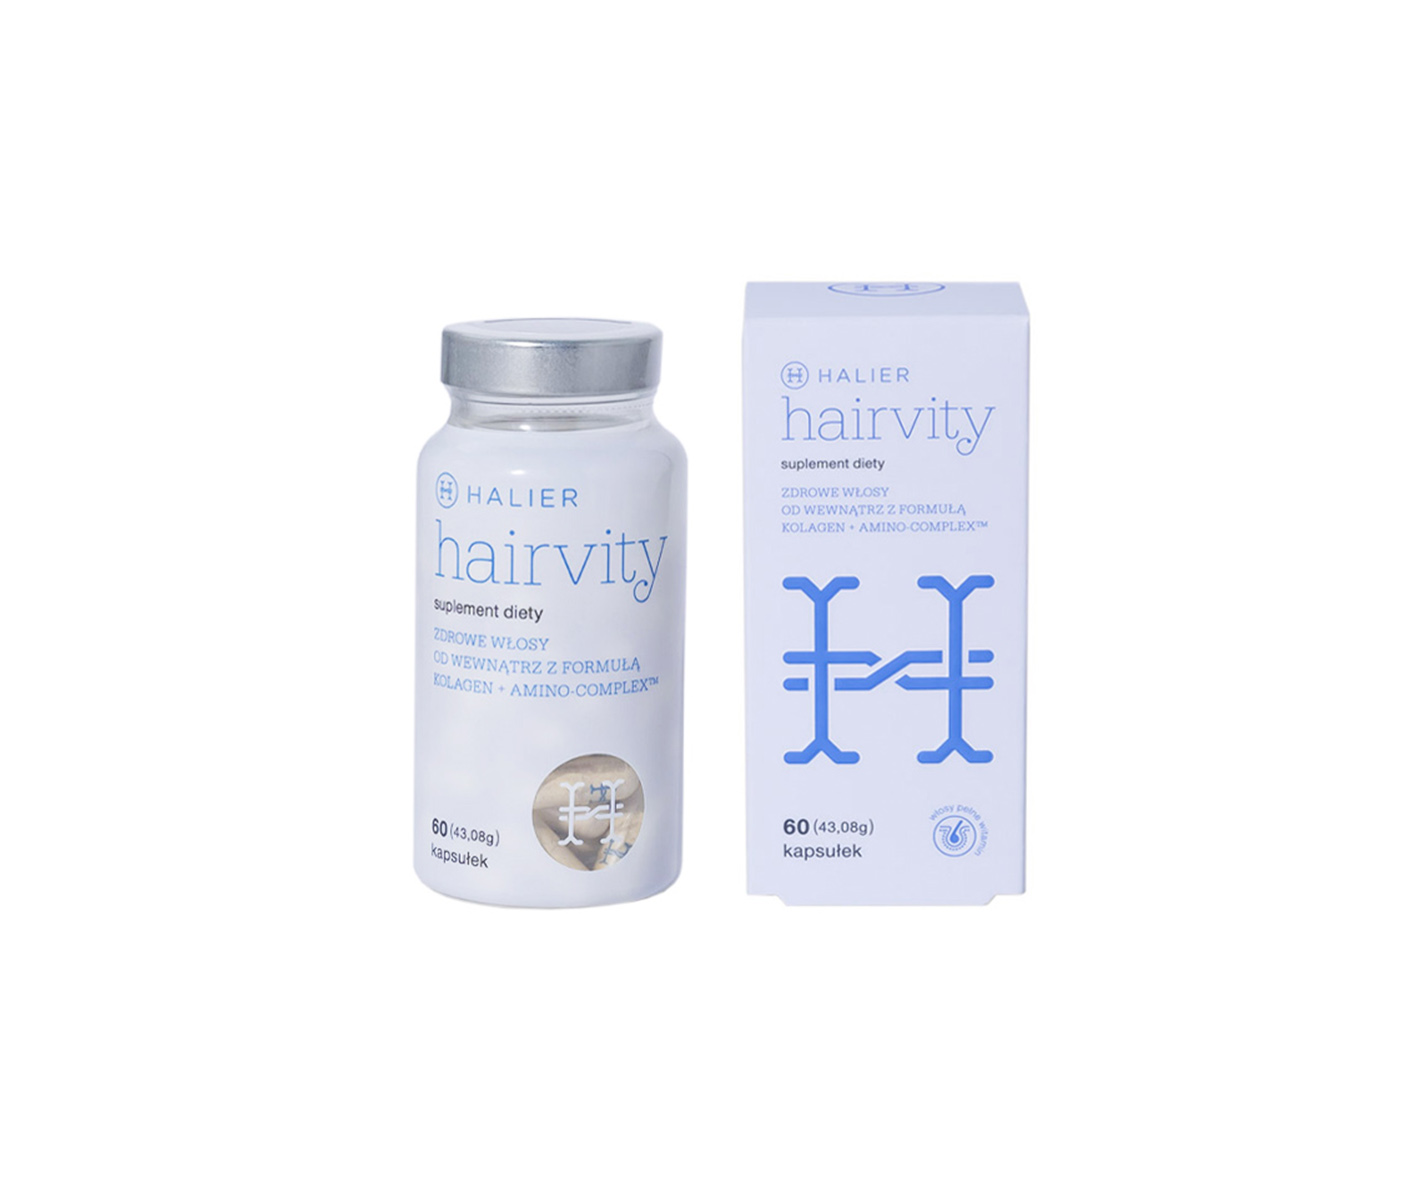 Halier, Hairvity, anti-hair loss tablets